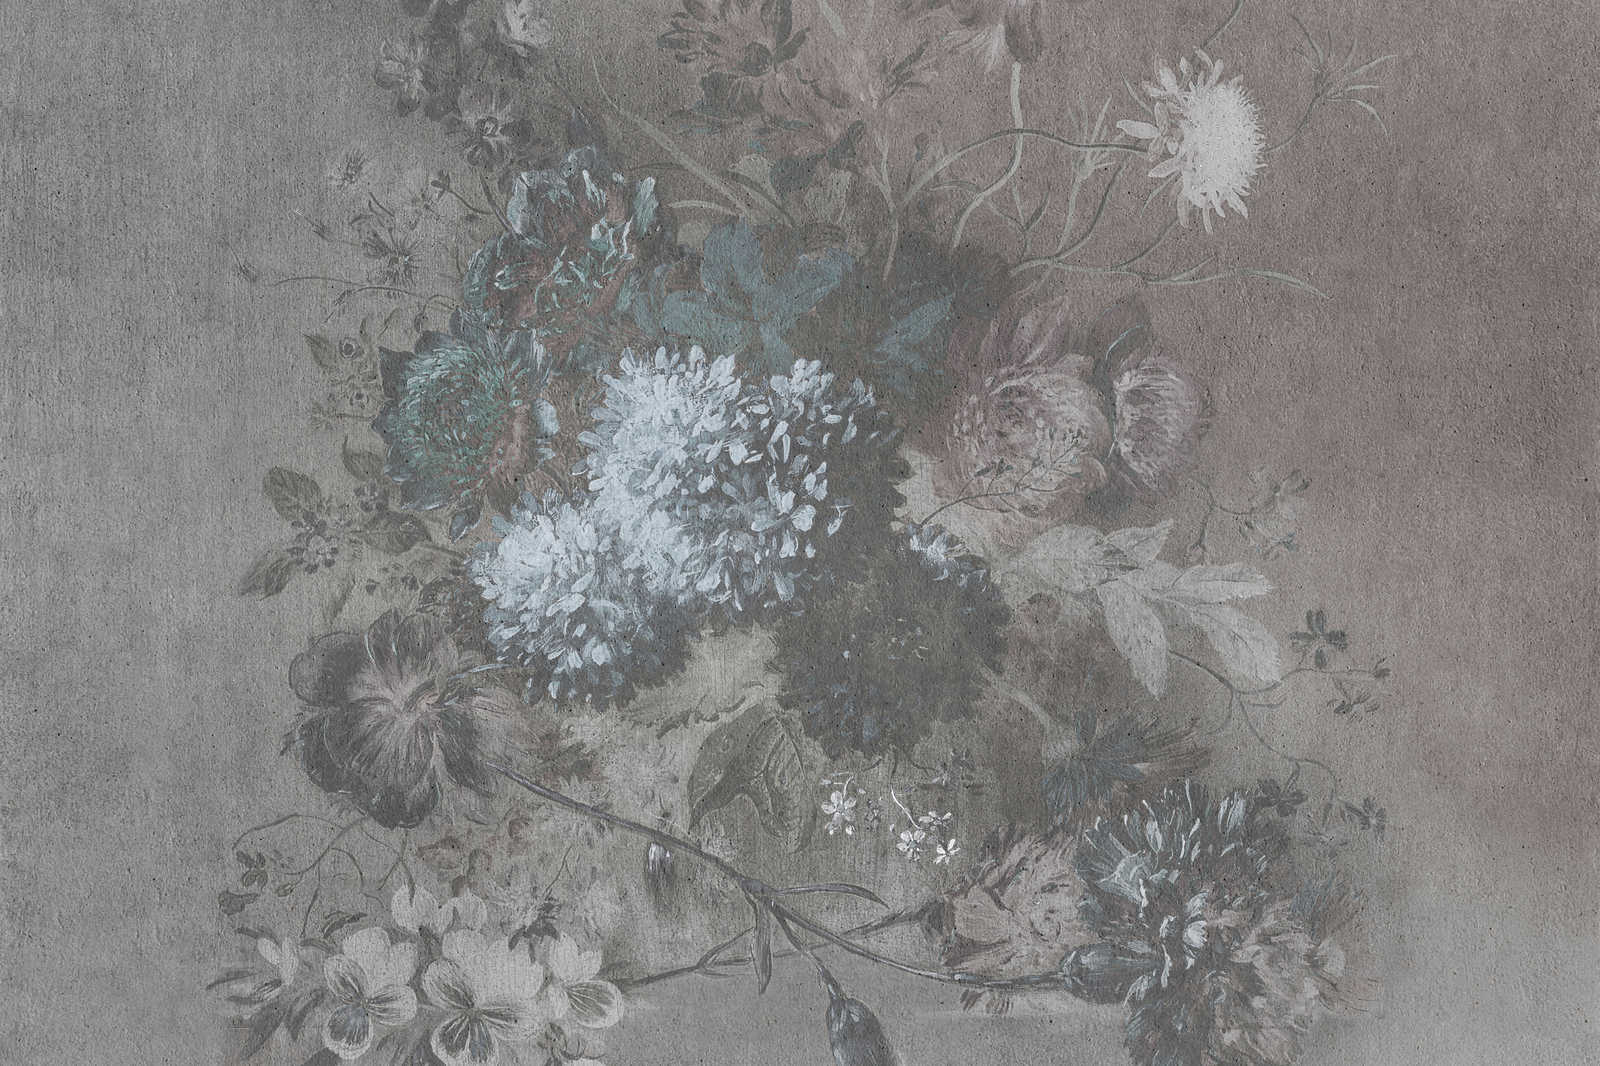             Cuadro en lienzo Estilo Vintage Ramo de flores | azul, gris - 0,90 m x 0,60 m
        